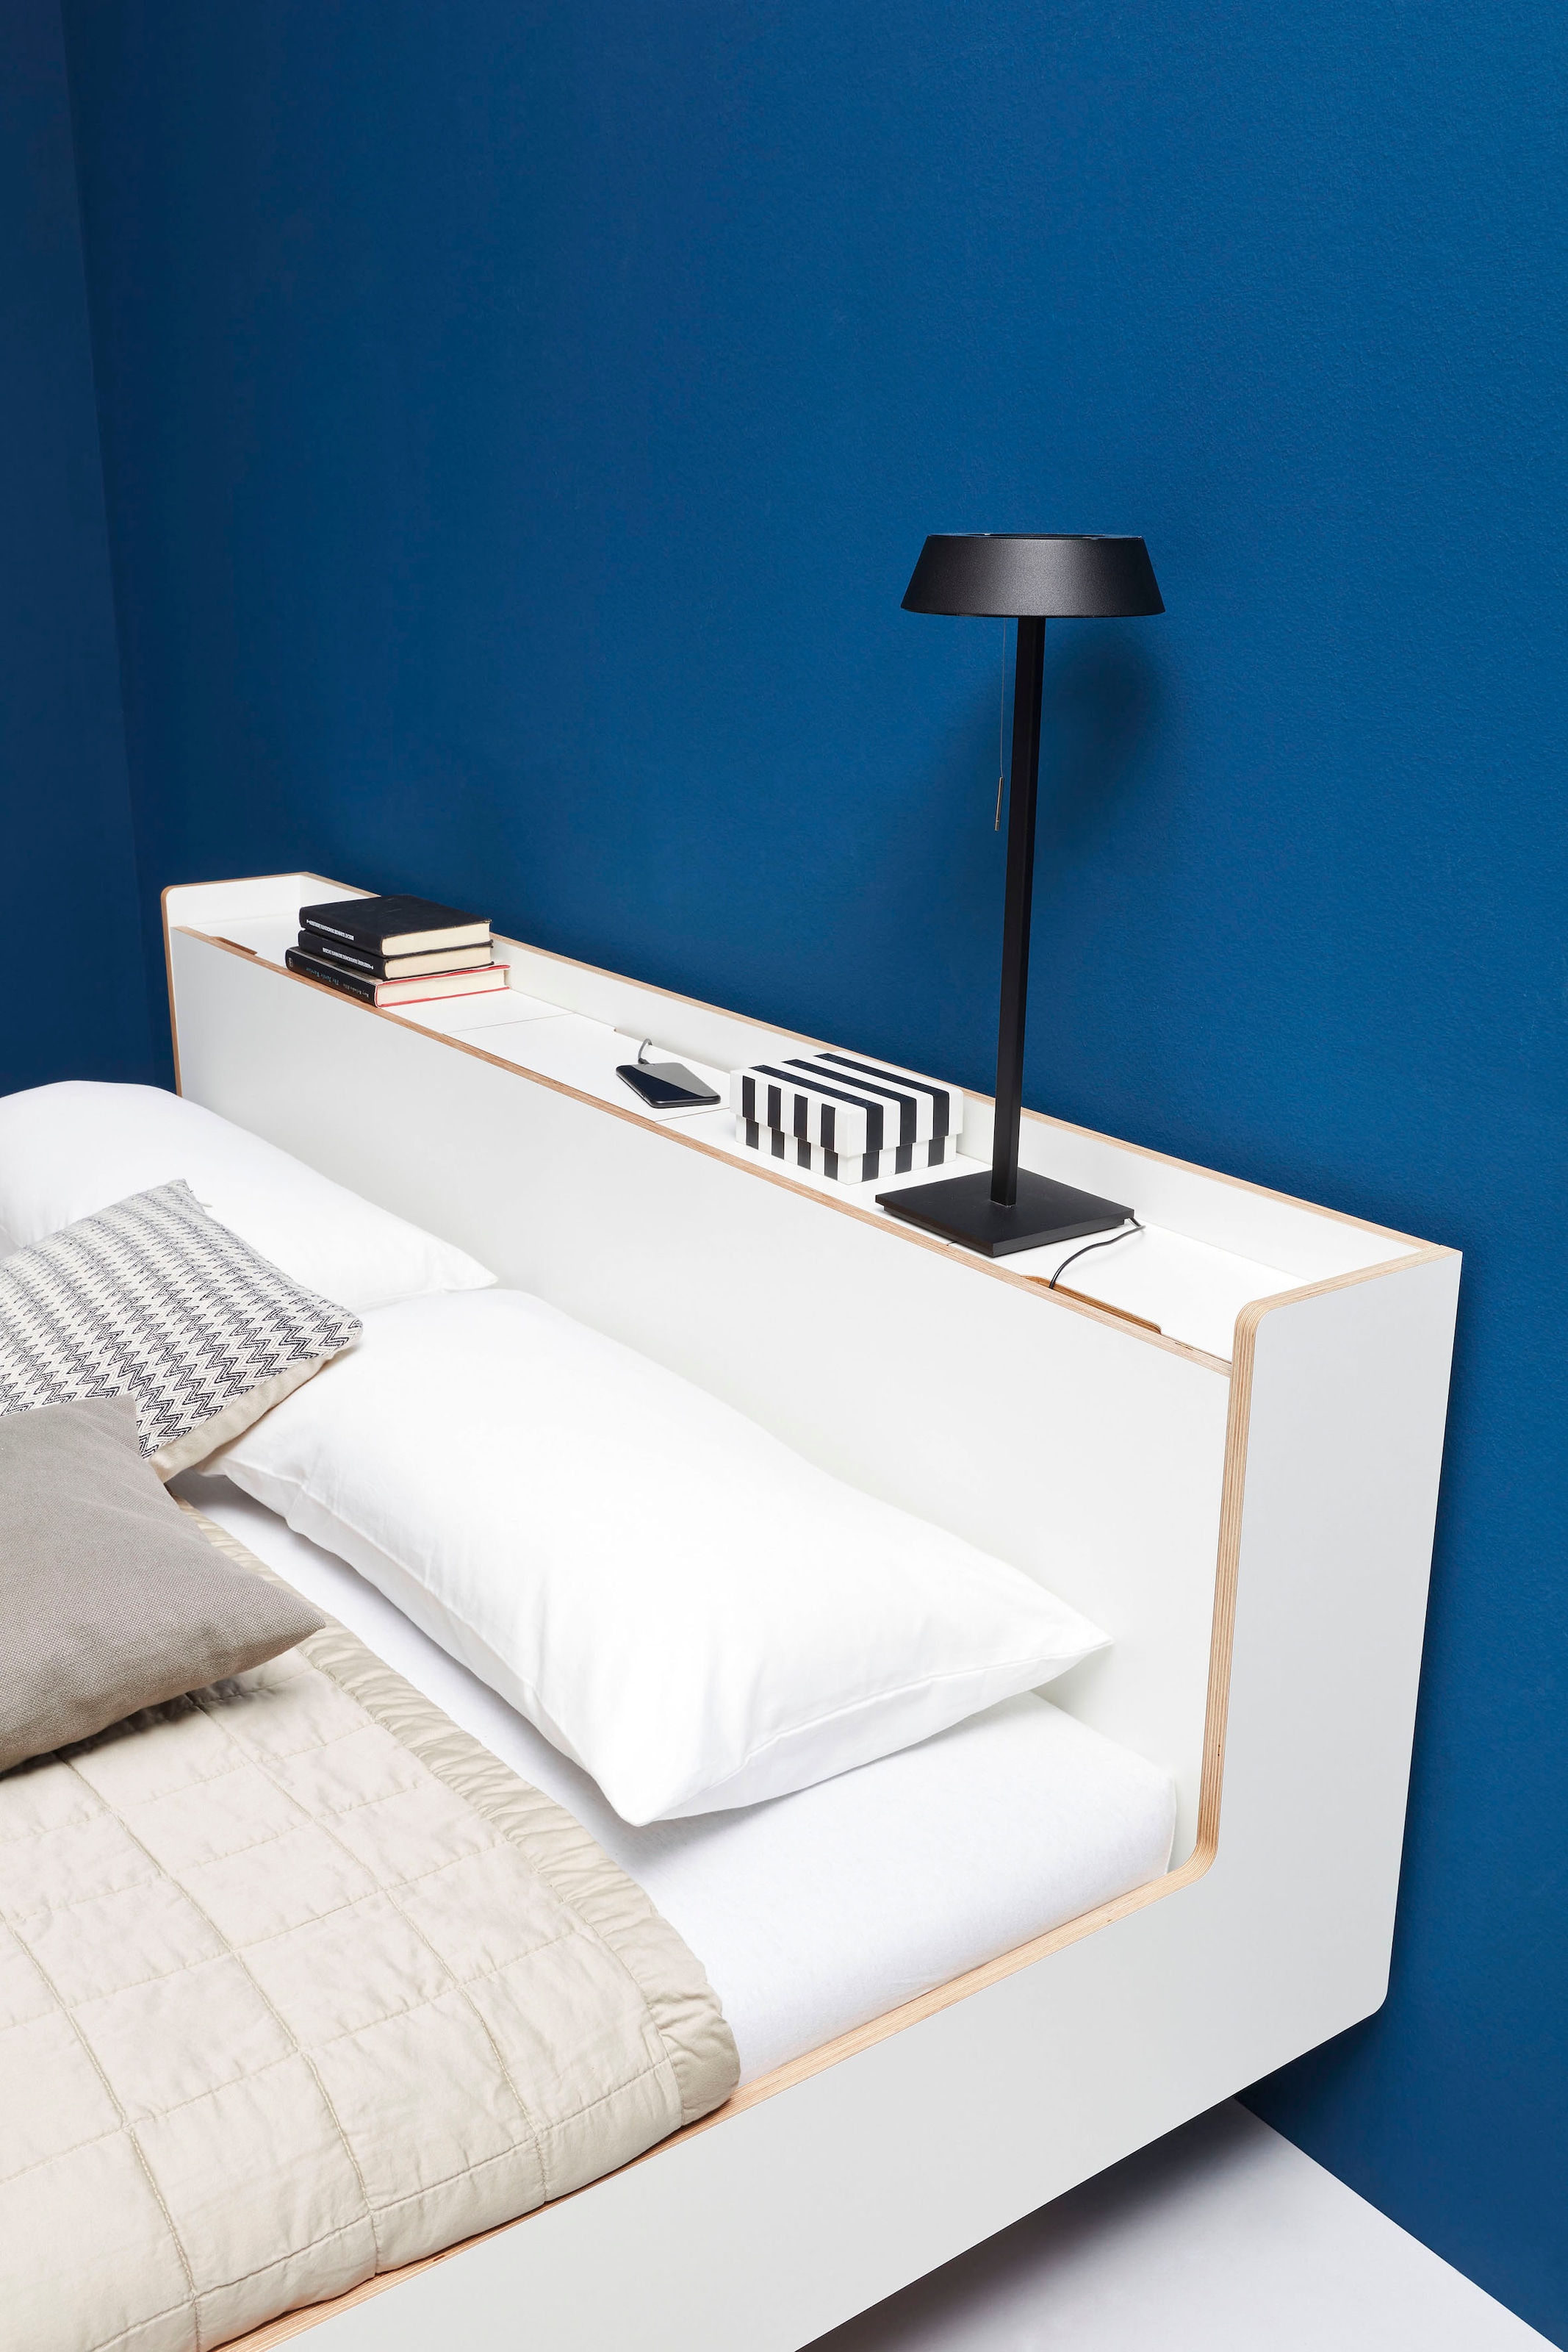 Müller SMALL LIVING Bett »NOOK«, in vier Breiten, Design by Michael Hilgers